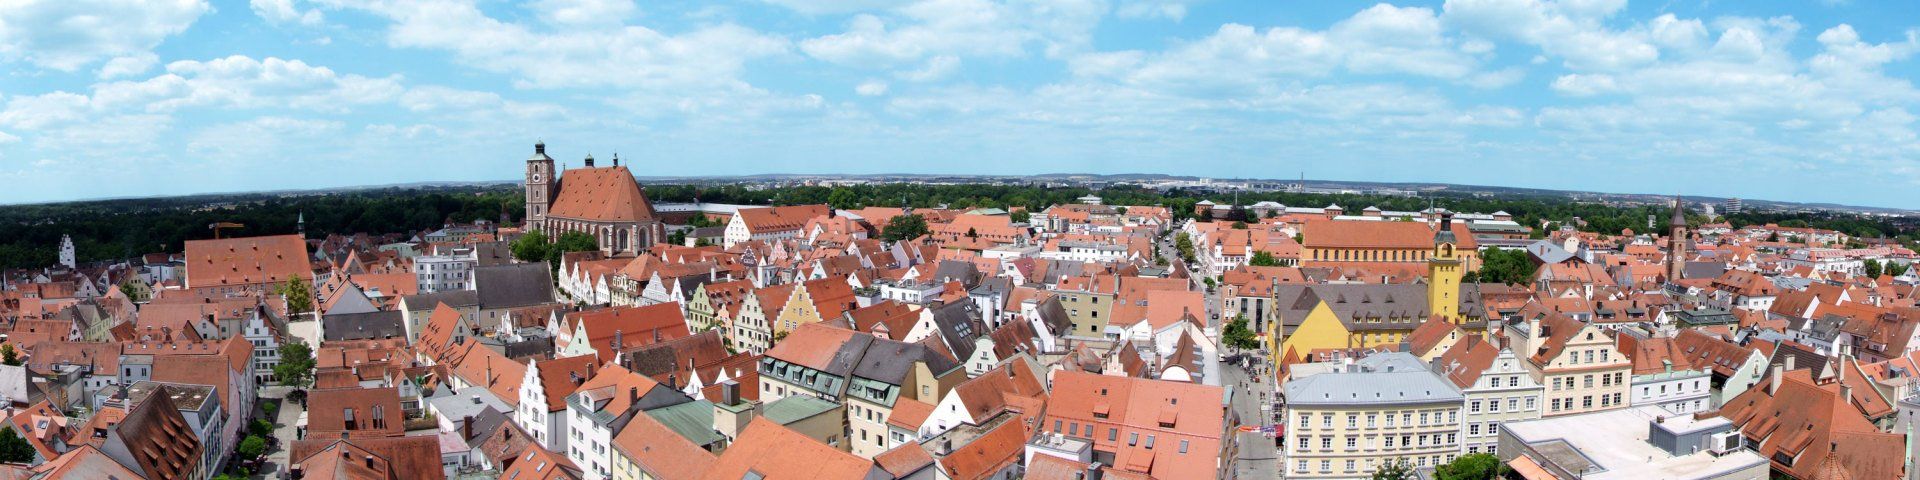 Blick über die Altstadt von Ingolstadt